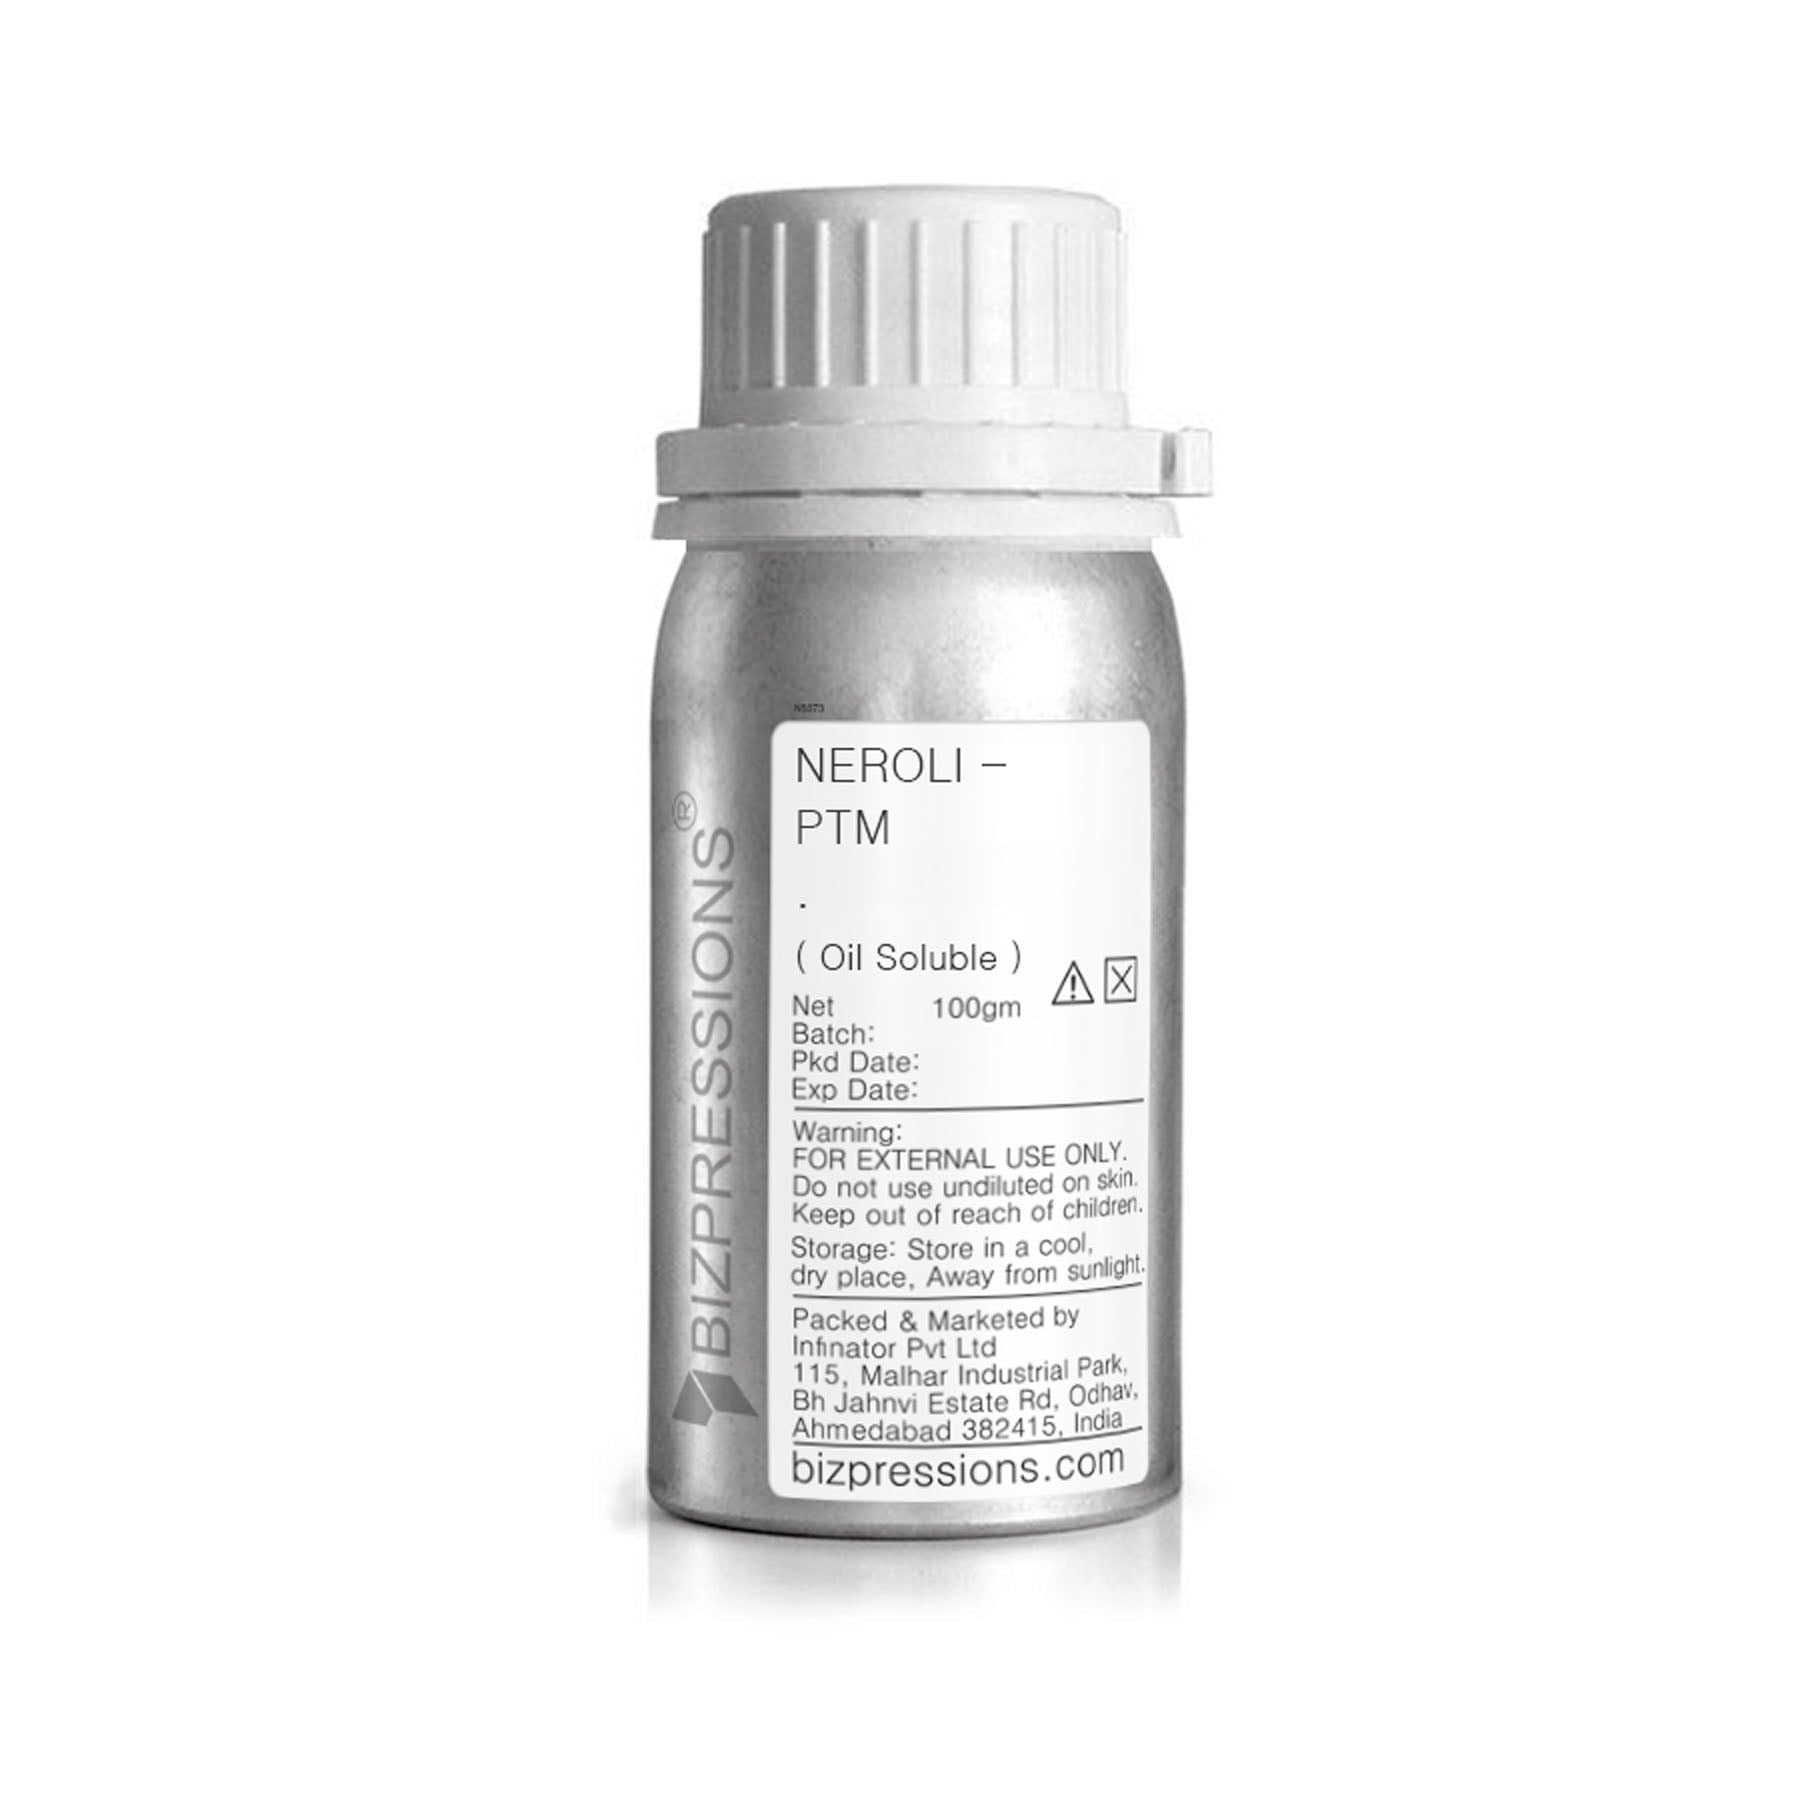 NEROLI - PTM - Fragrance ( Oil Soluble ) - 100 gm